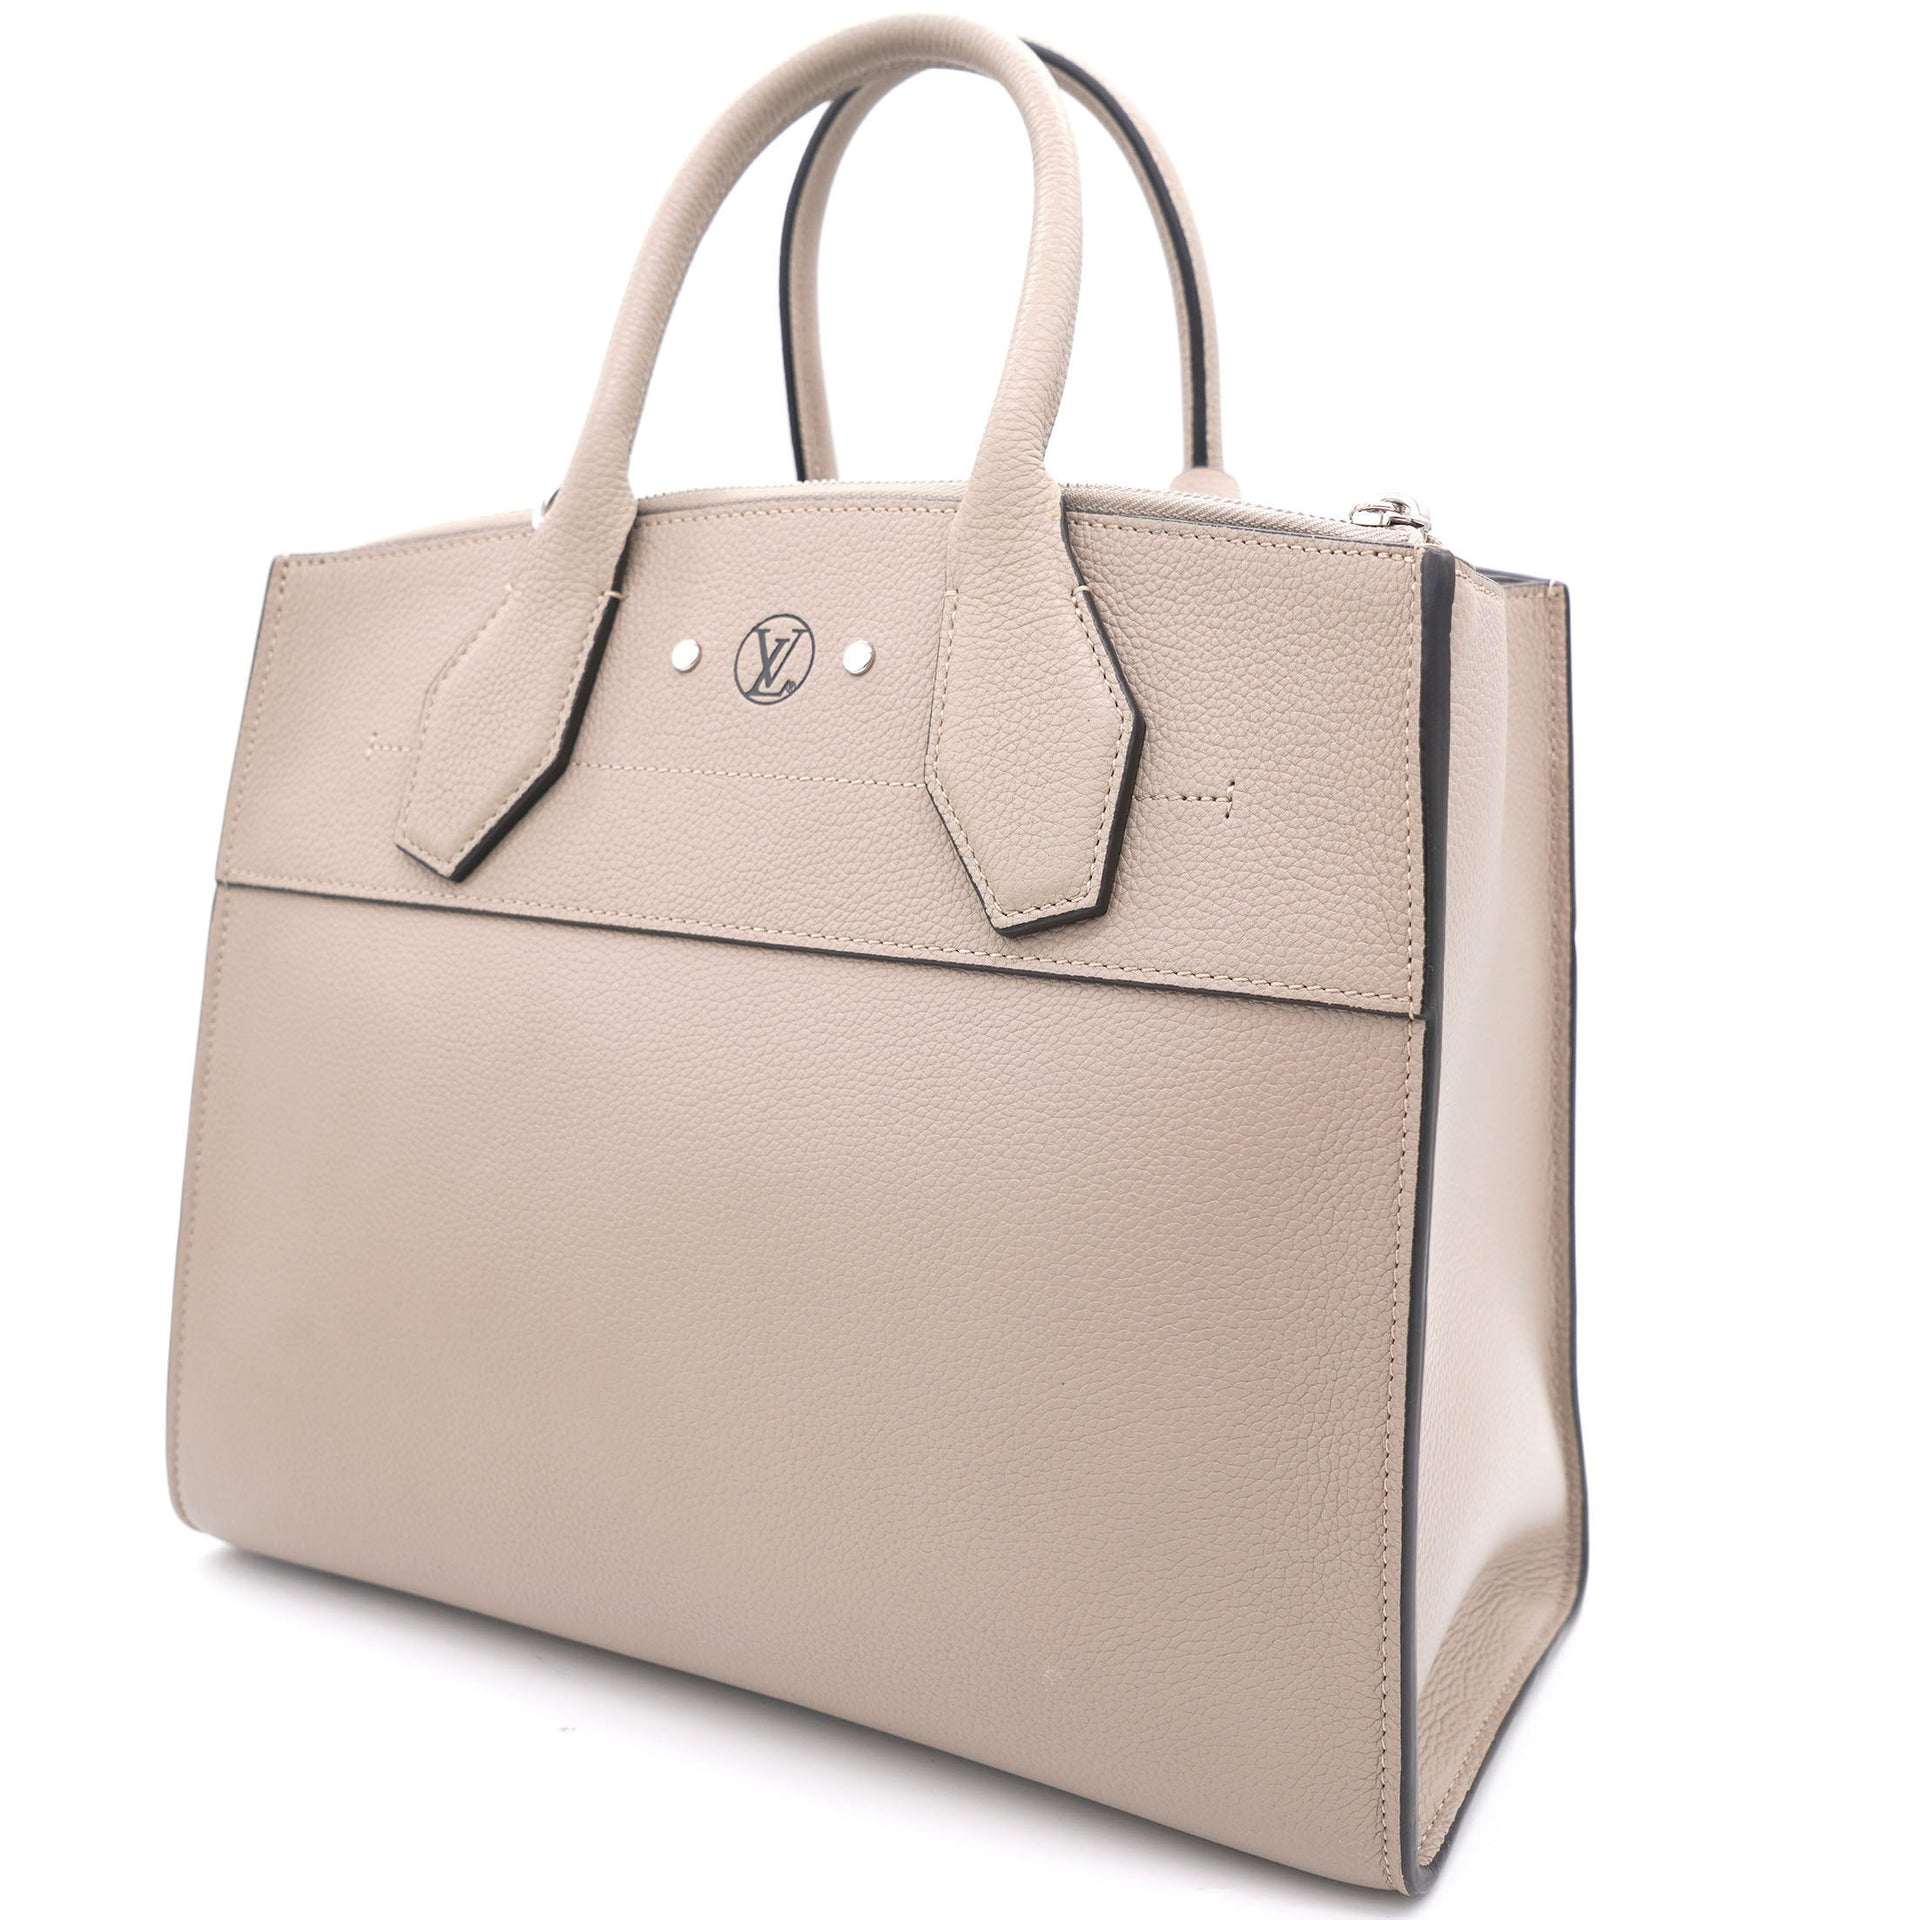 Louis Vuitton Beige/Brown Leather City Steamer Shoulder Bag Louis